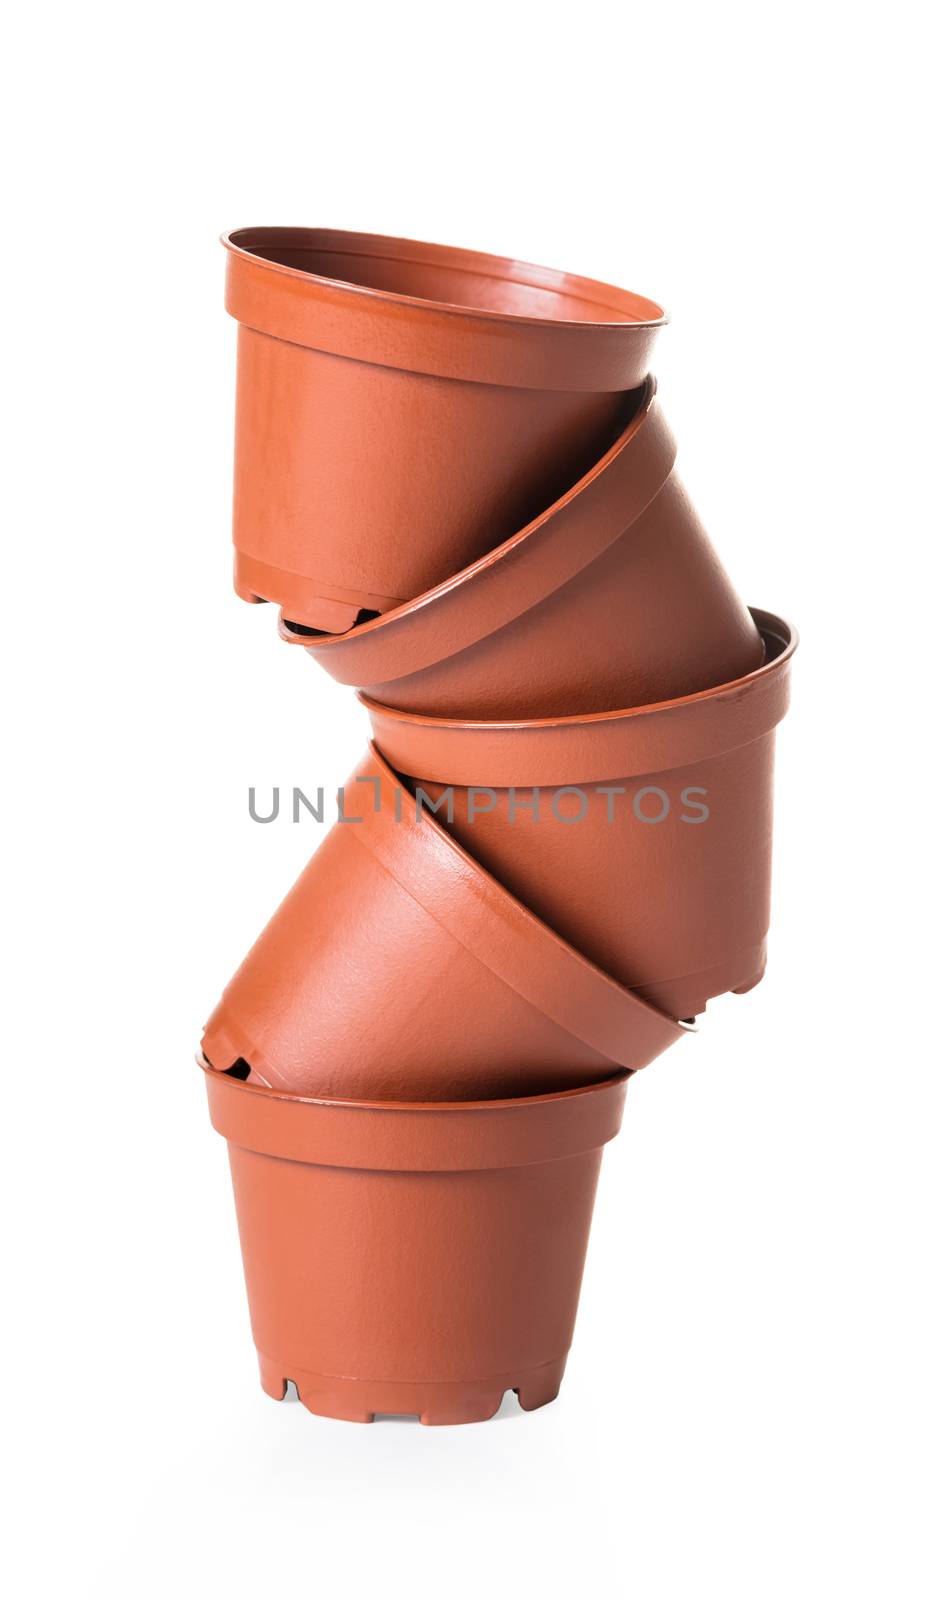 new flower pots  by MegaArt